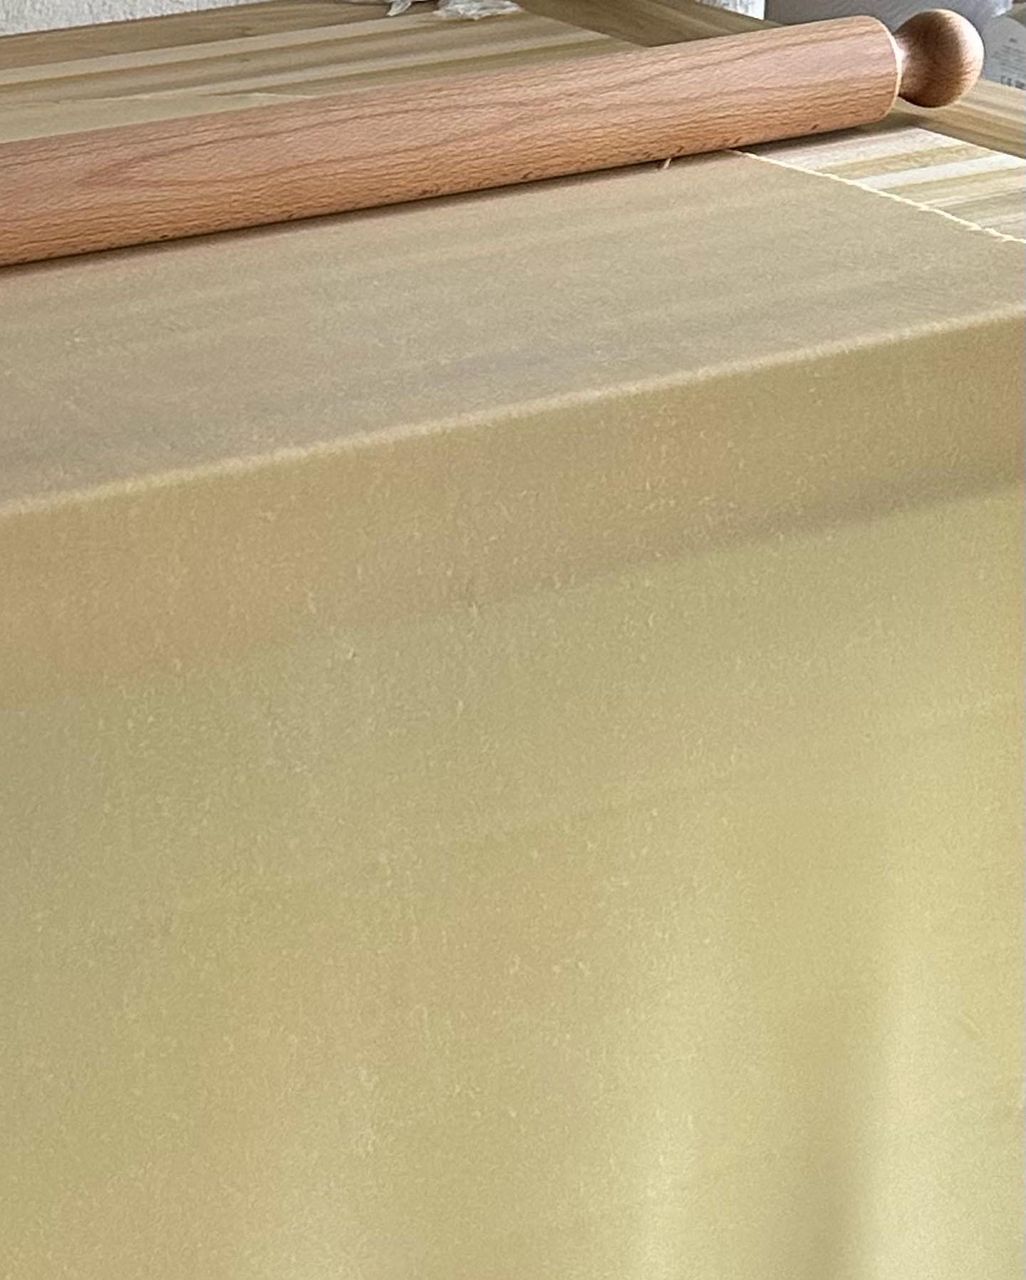 Tagliere board, large pasta rolling surface, Mateo Kitchen – NonnasWoodShop